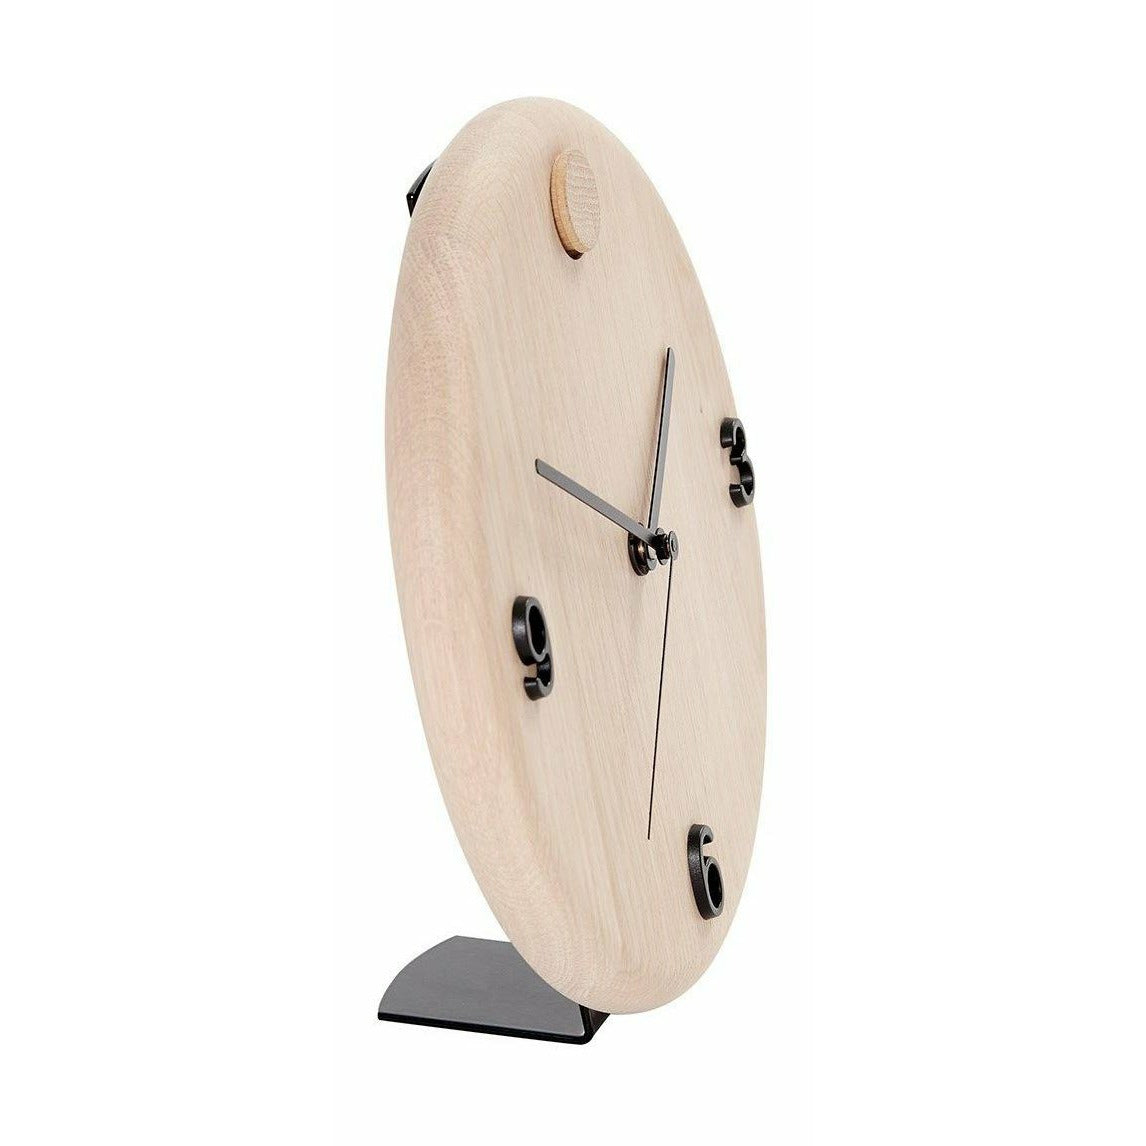 Andersen Furniture Hållare för Wood Time Watch, svart